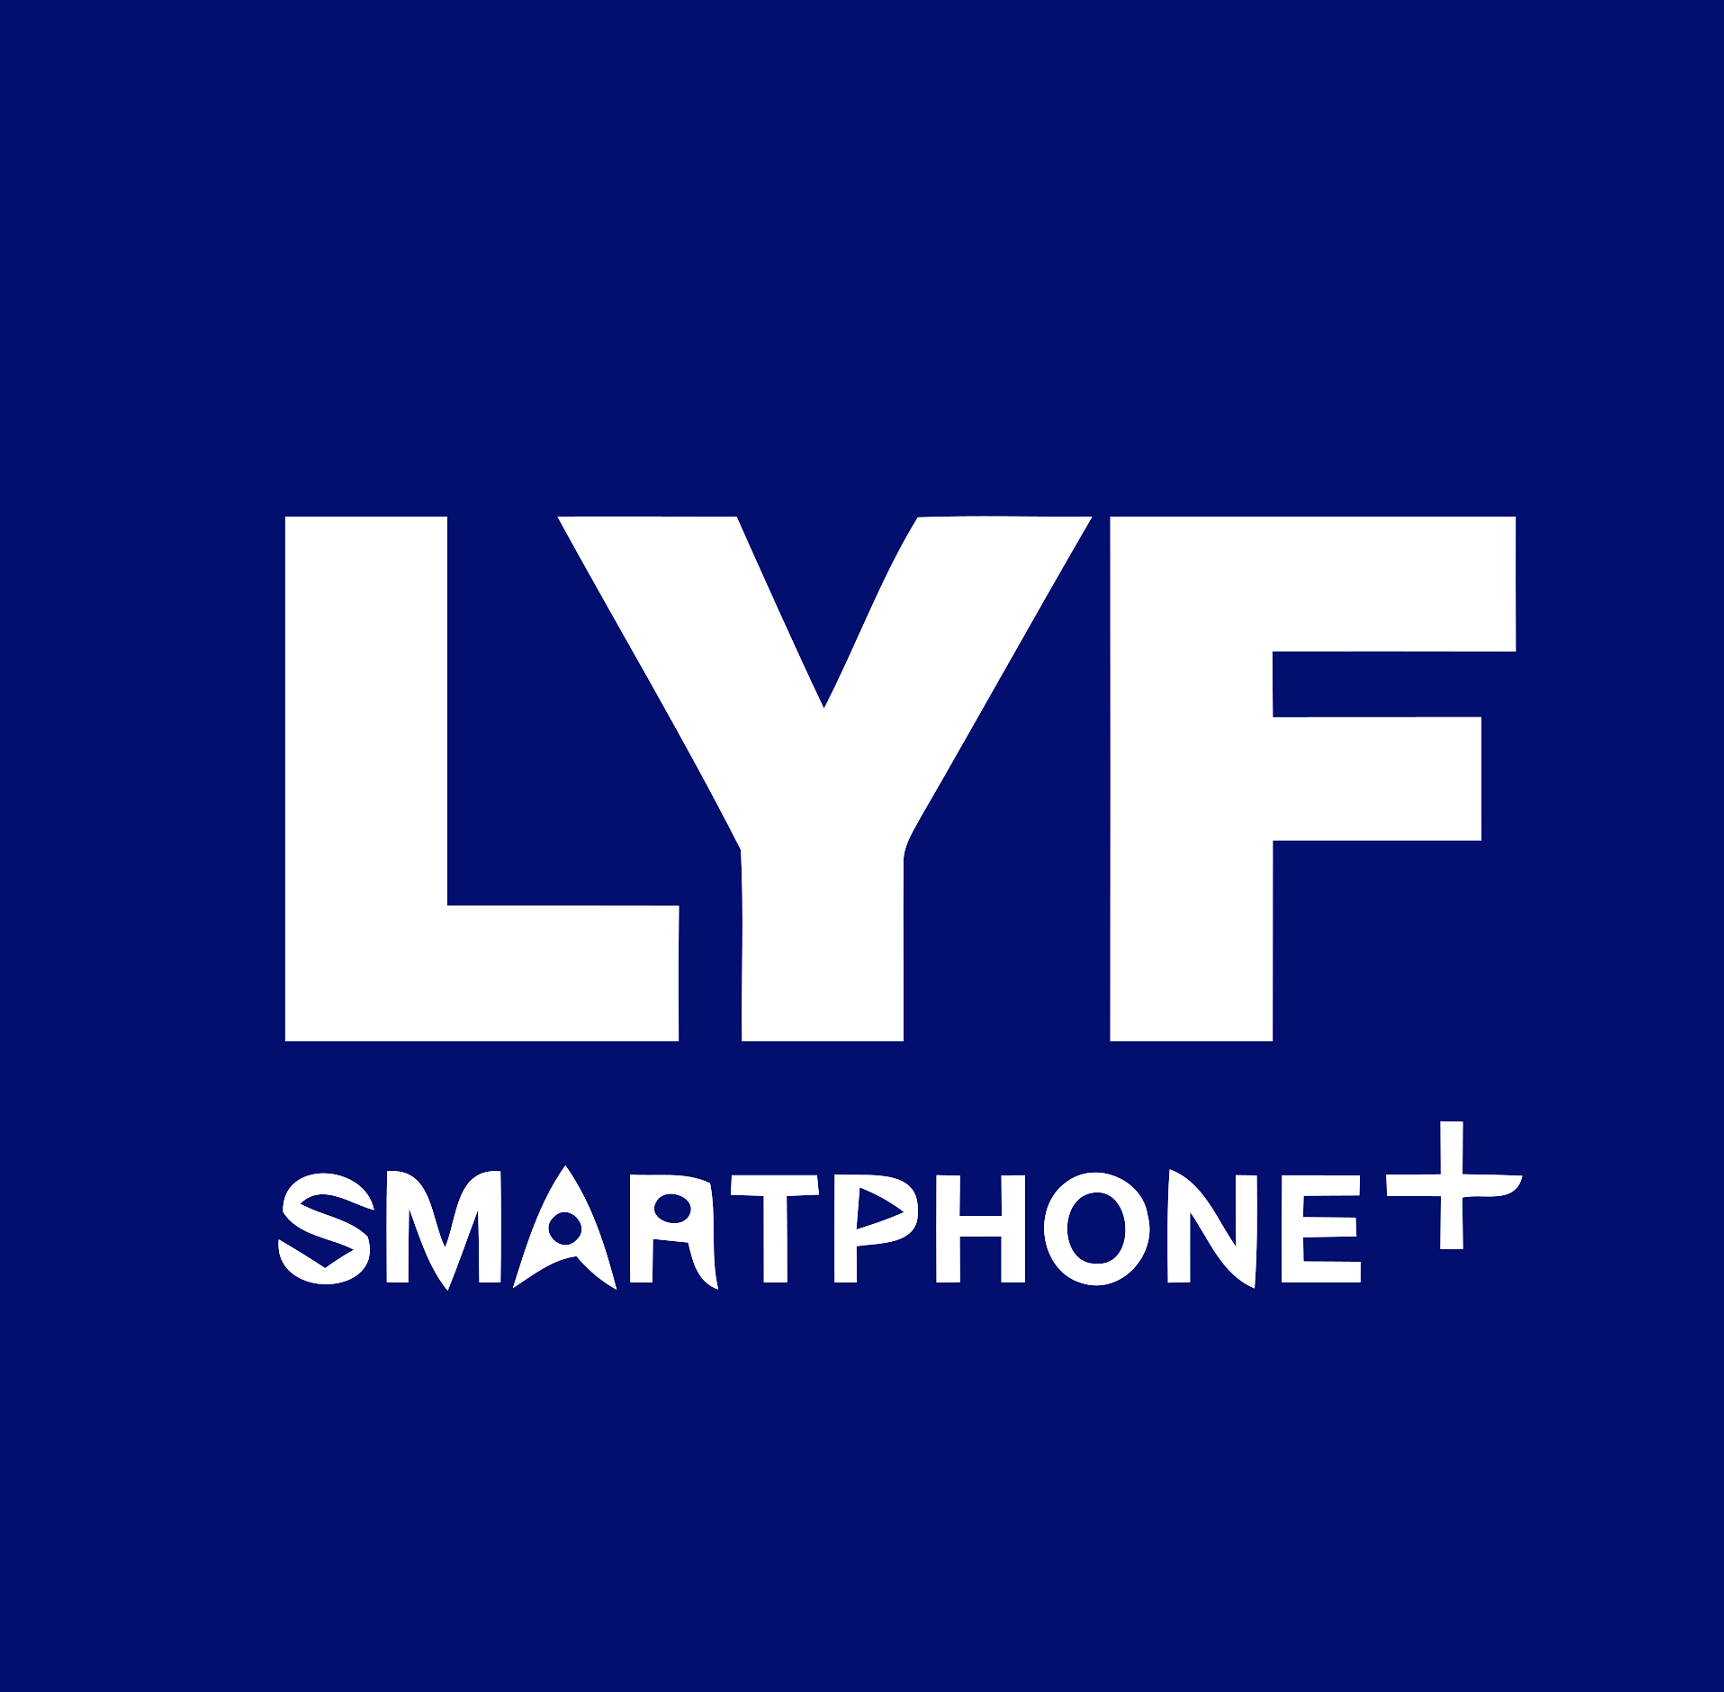 Logo of Reliance LYF Mobiles Company